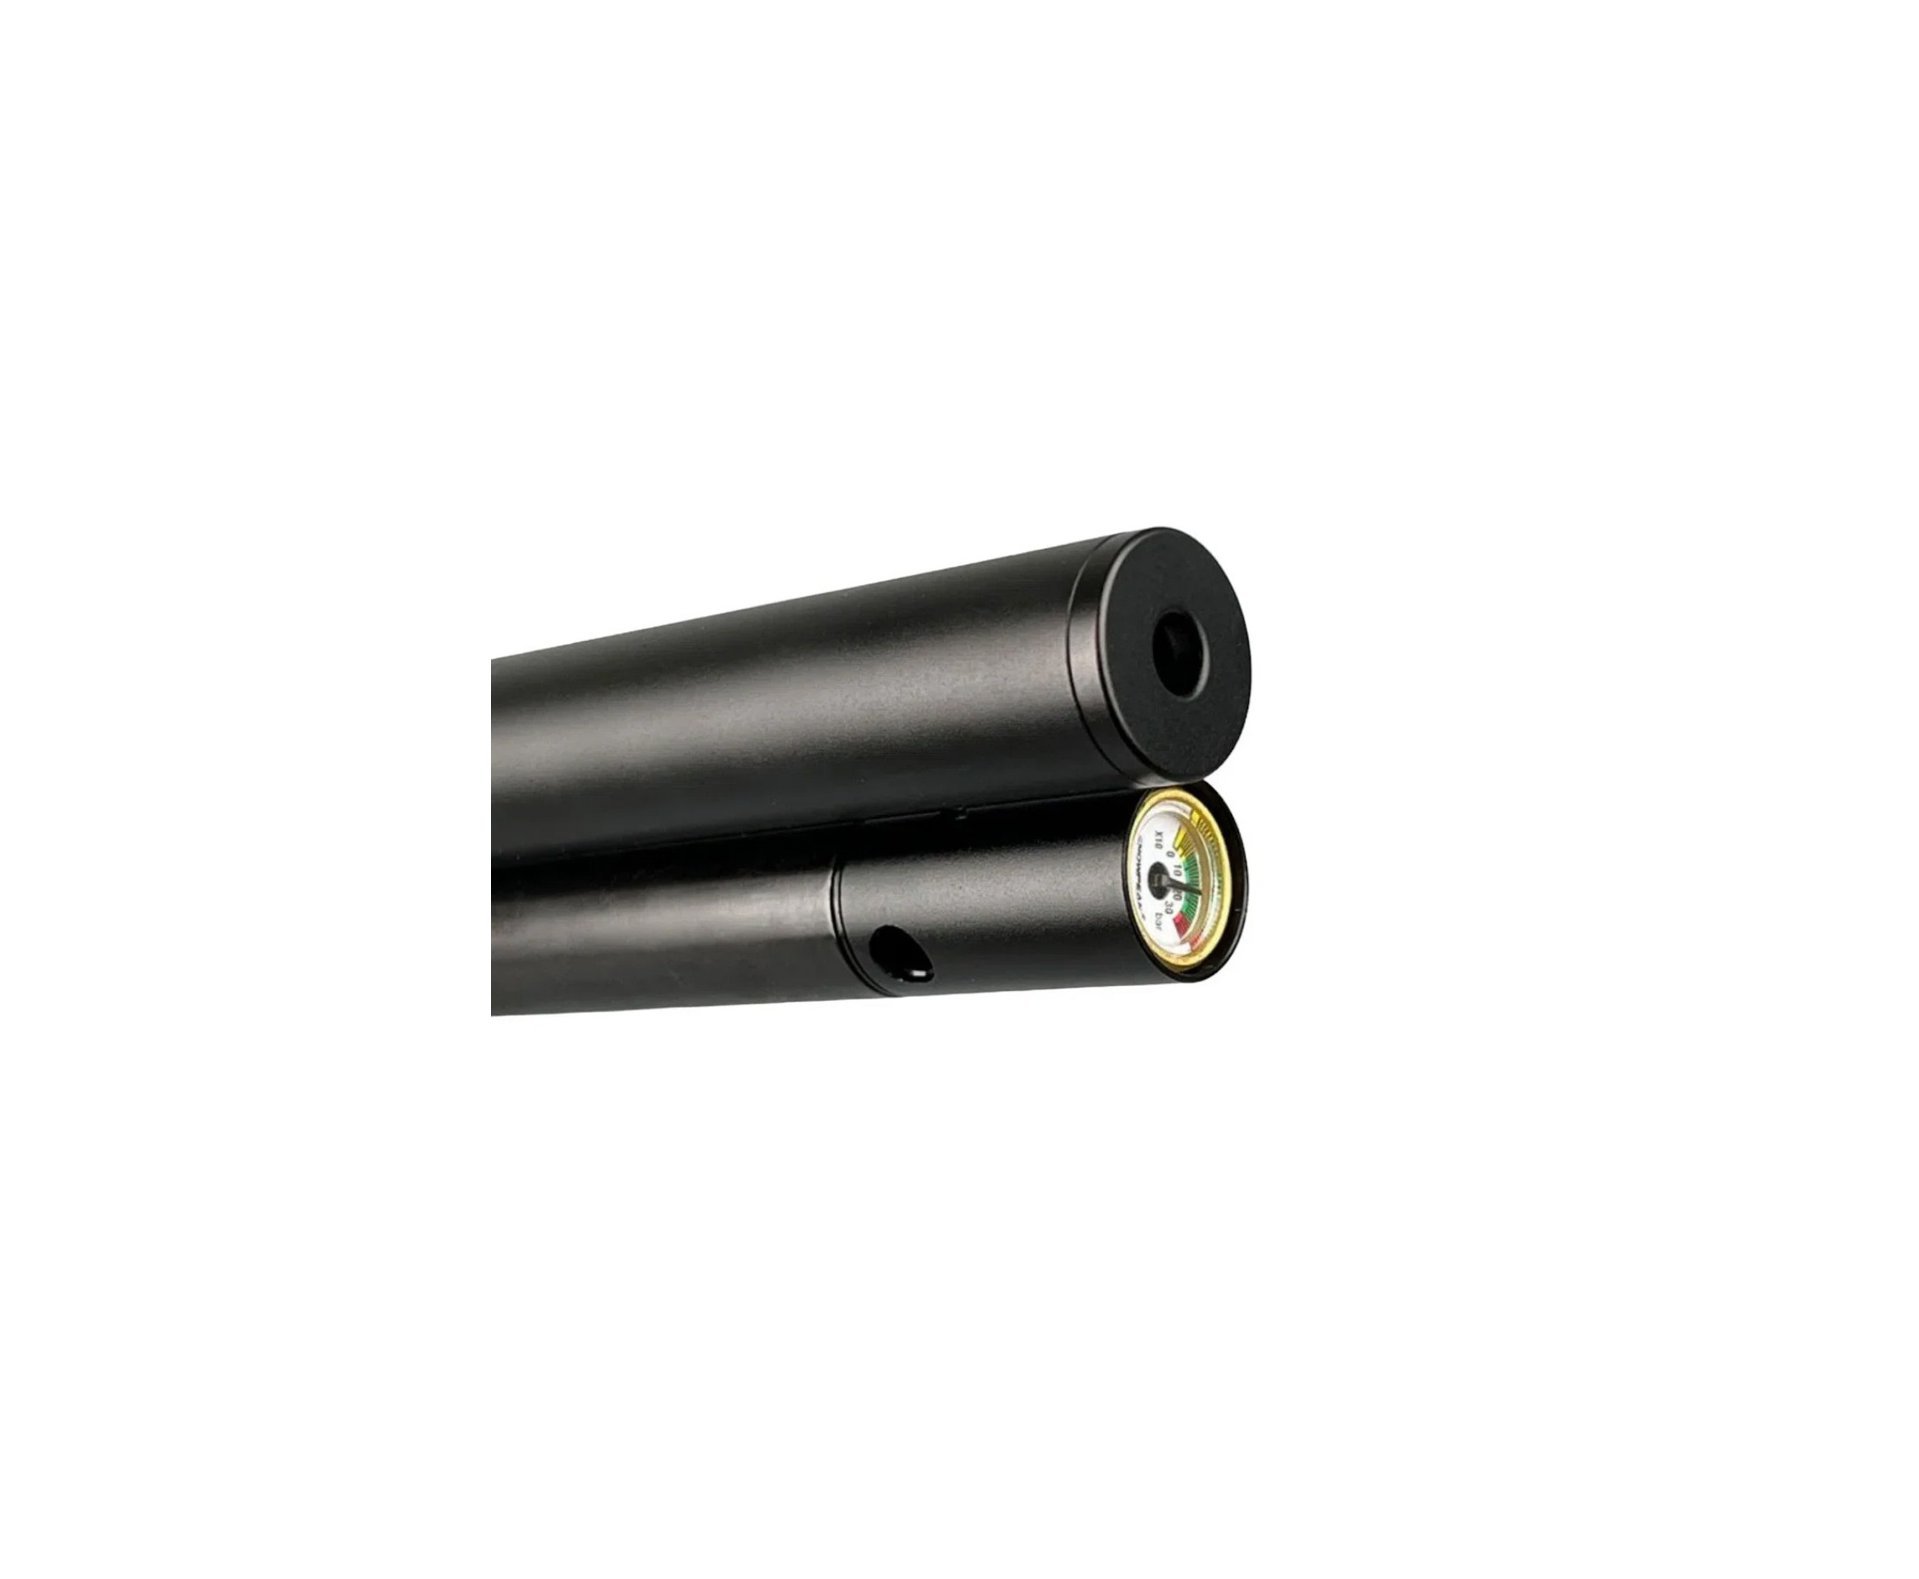 Carabina de Pressão PCP Artemis T-REX Bullpup 4.5mm - Fixxar + Bomba + Capa + Luneta 4-16x50 + Mount 22mm